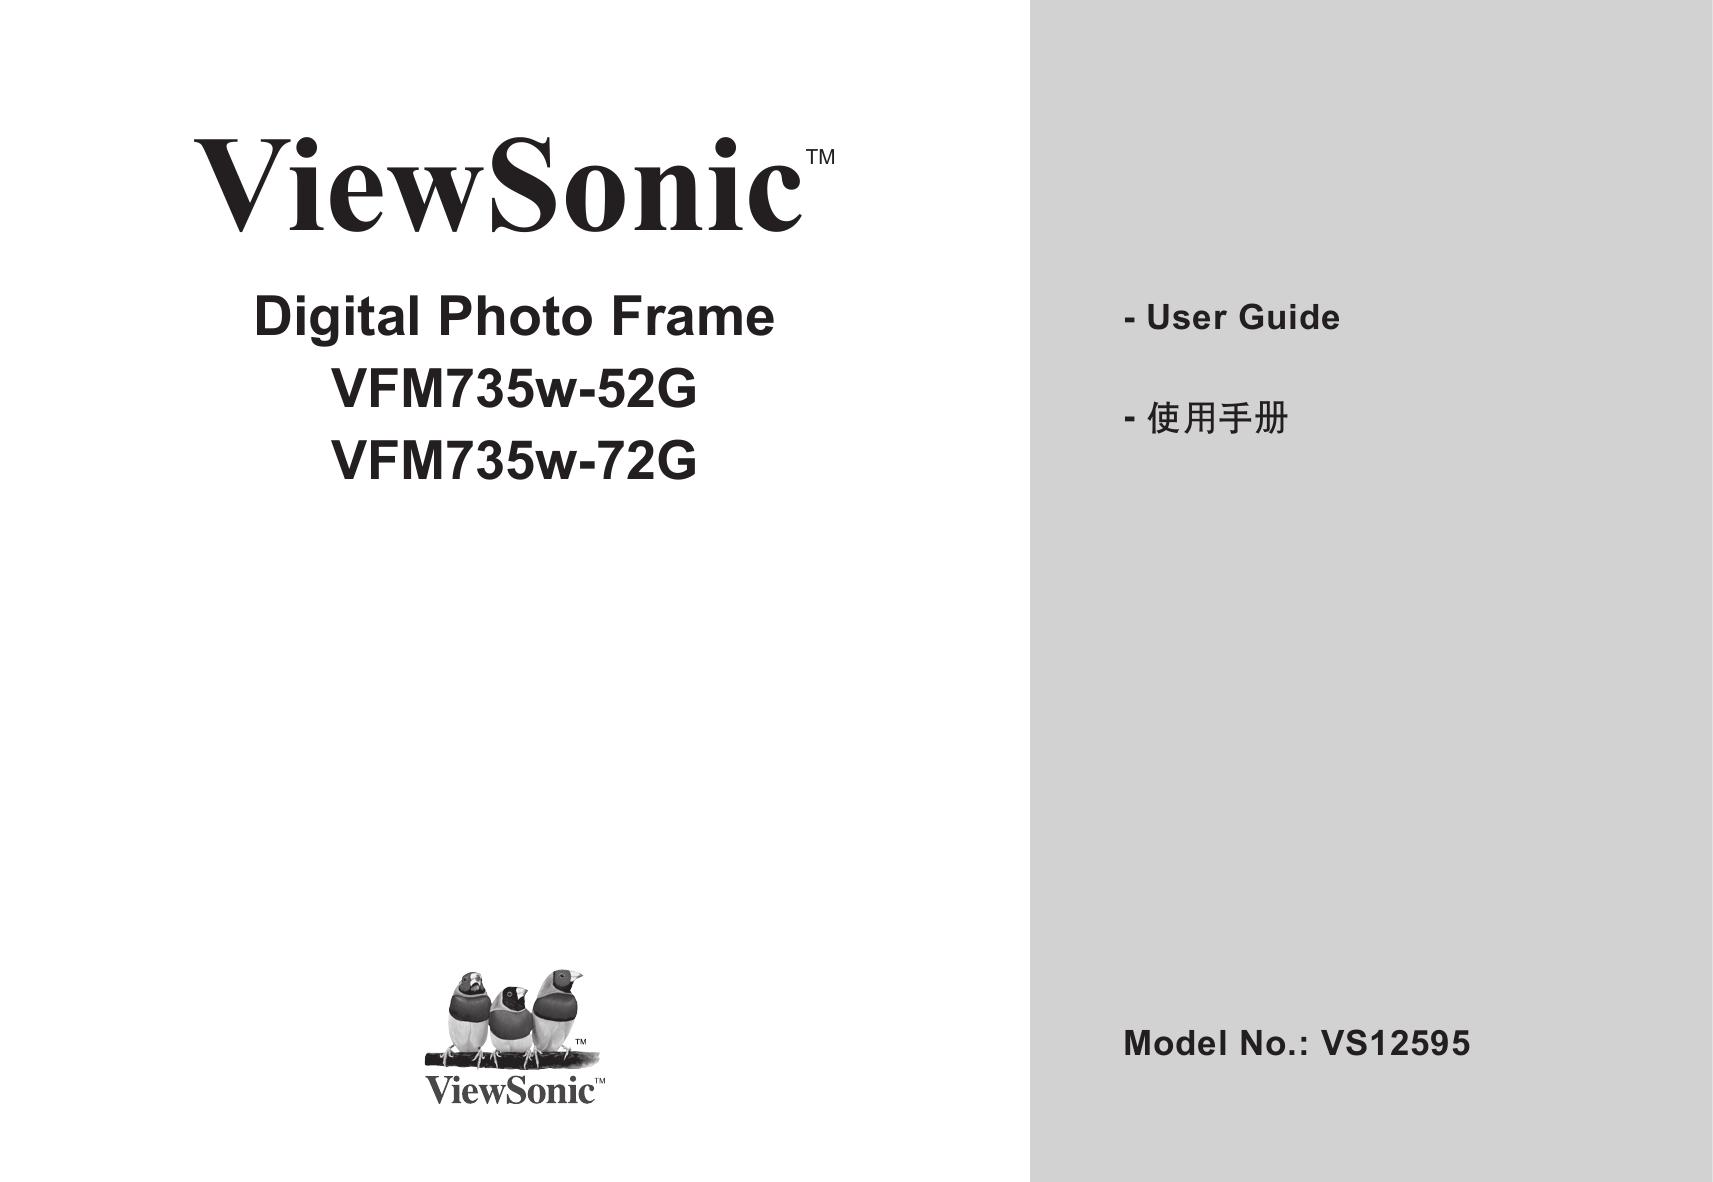 ViewSonic VFM735W-52G Digital Photo Frame User Manual